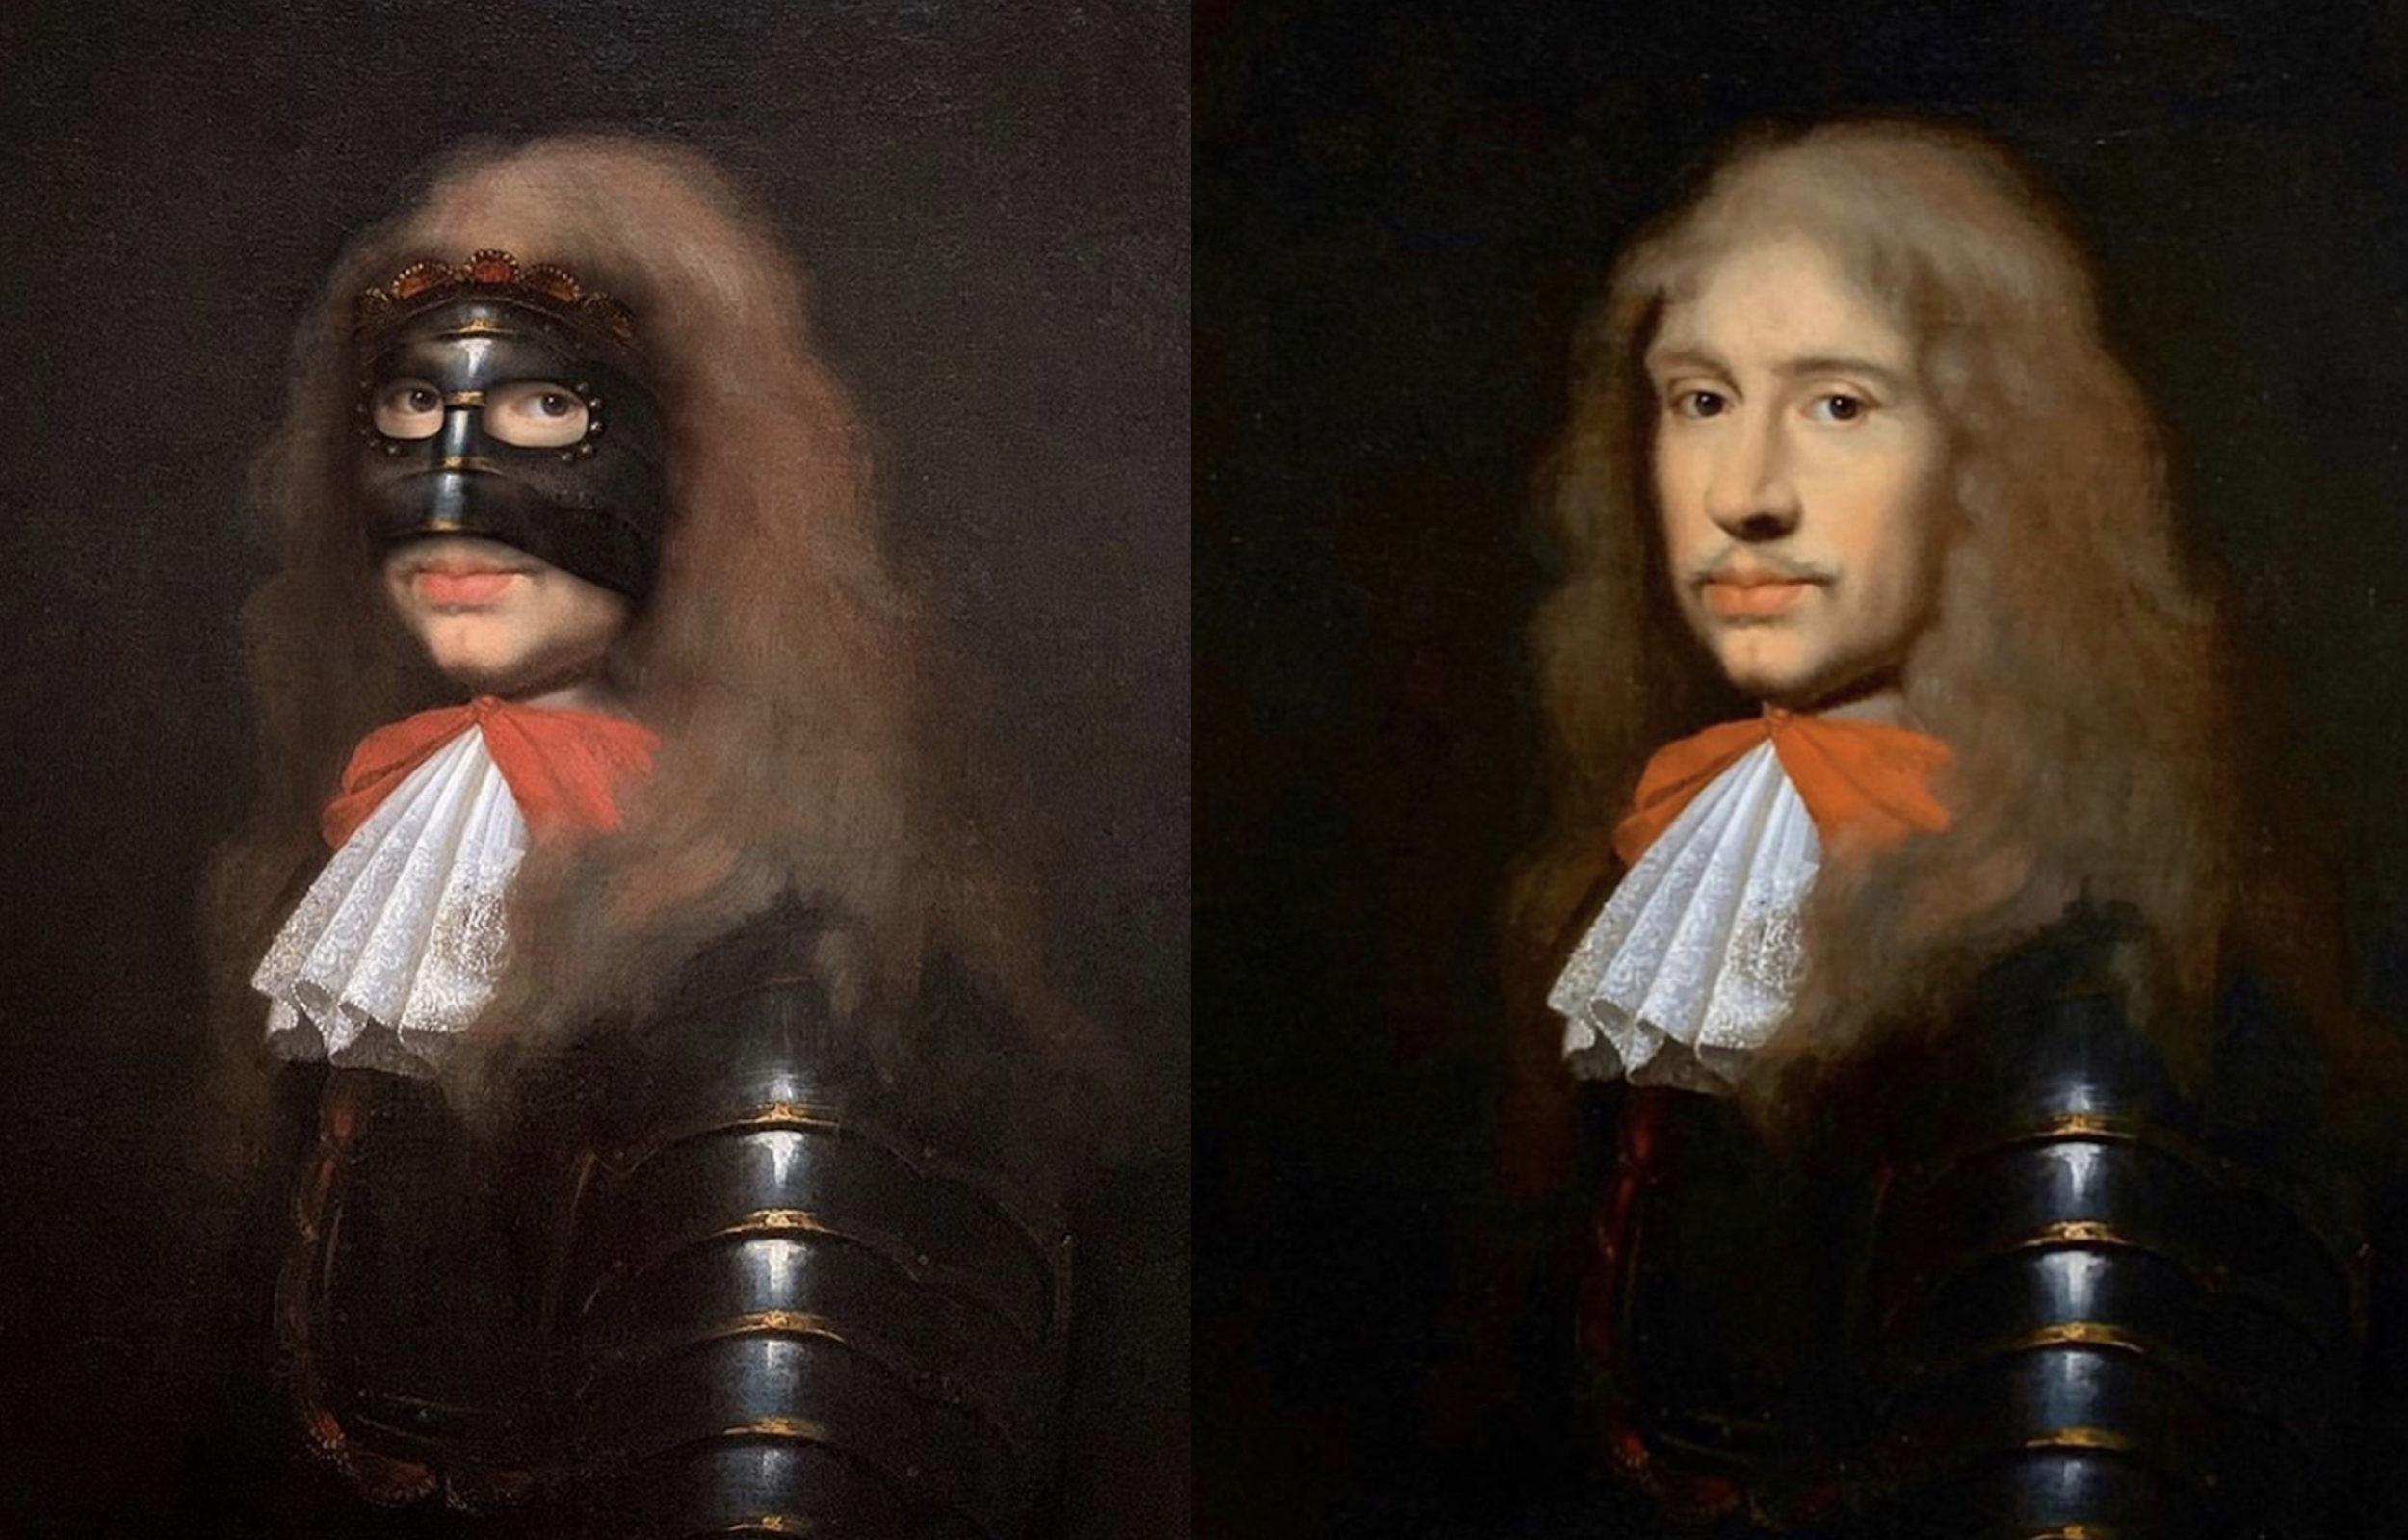 Left: Hidden Boguslas Photocollage 2020. Right: Original artwork Period Portraits, now sold.